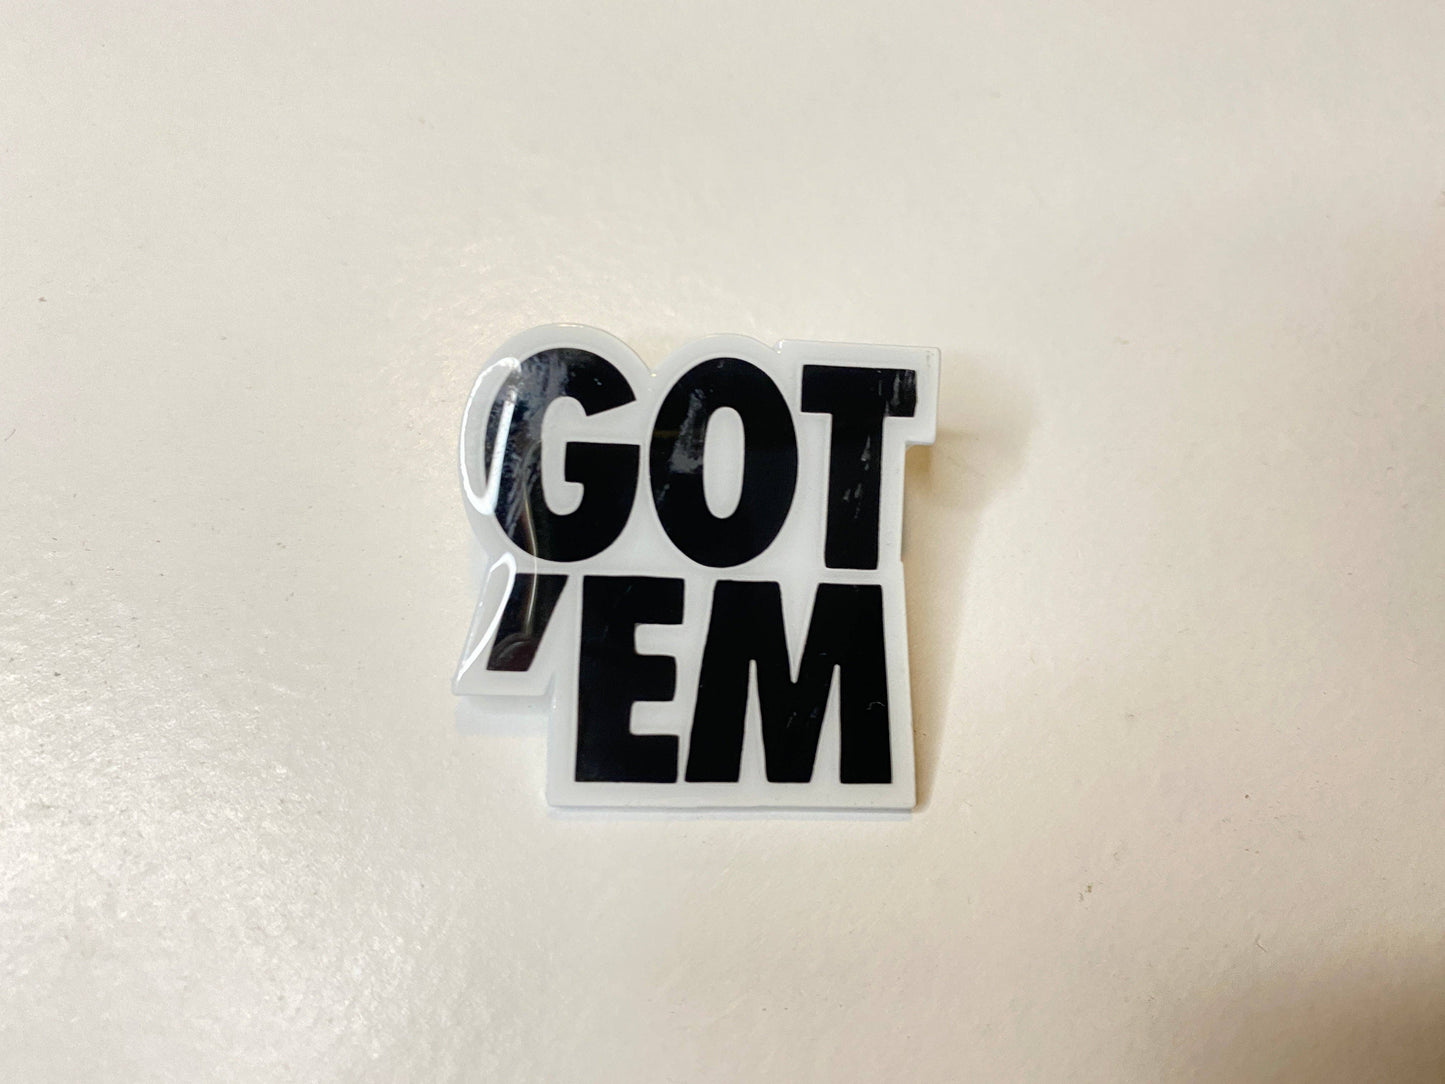 GOT'EM | Hard Enamel Pin pin Hype Pins   